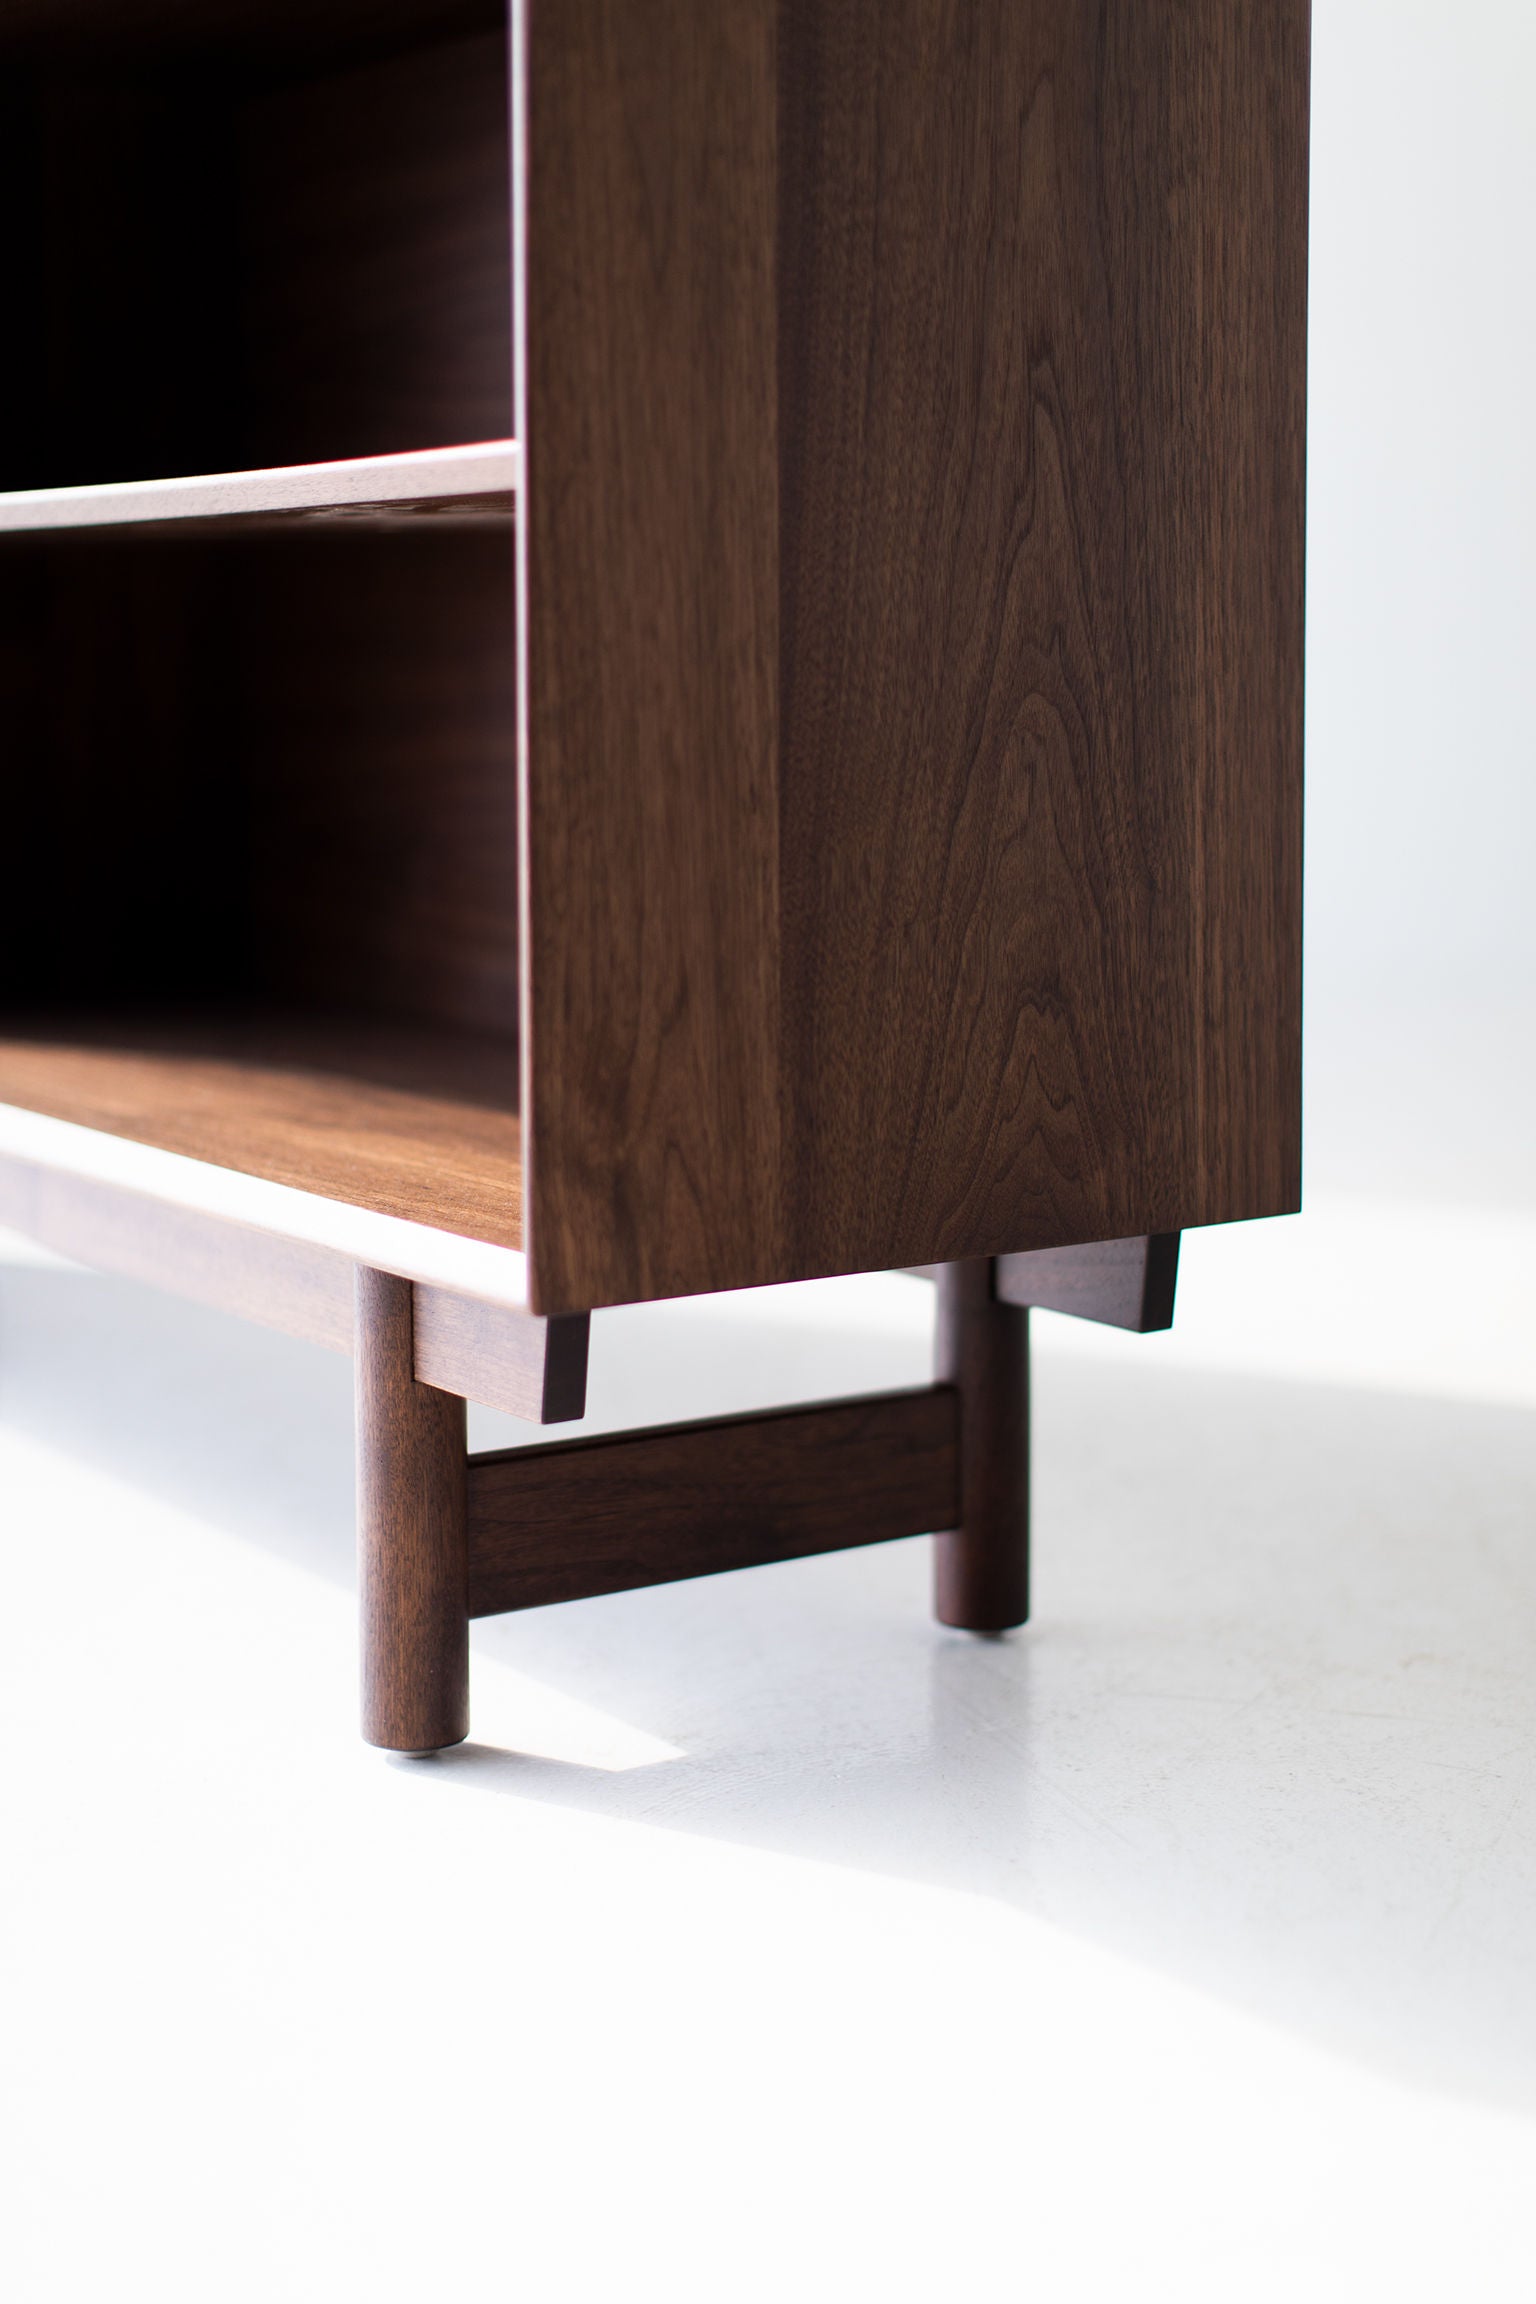 Peabody Modern Walnut Bookcase - 2106